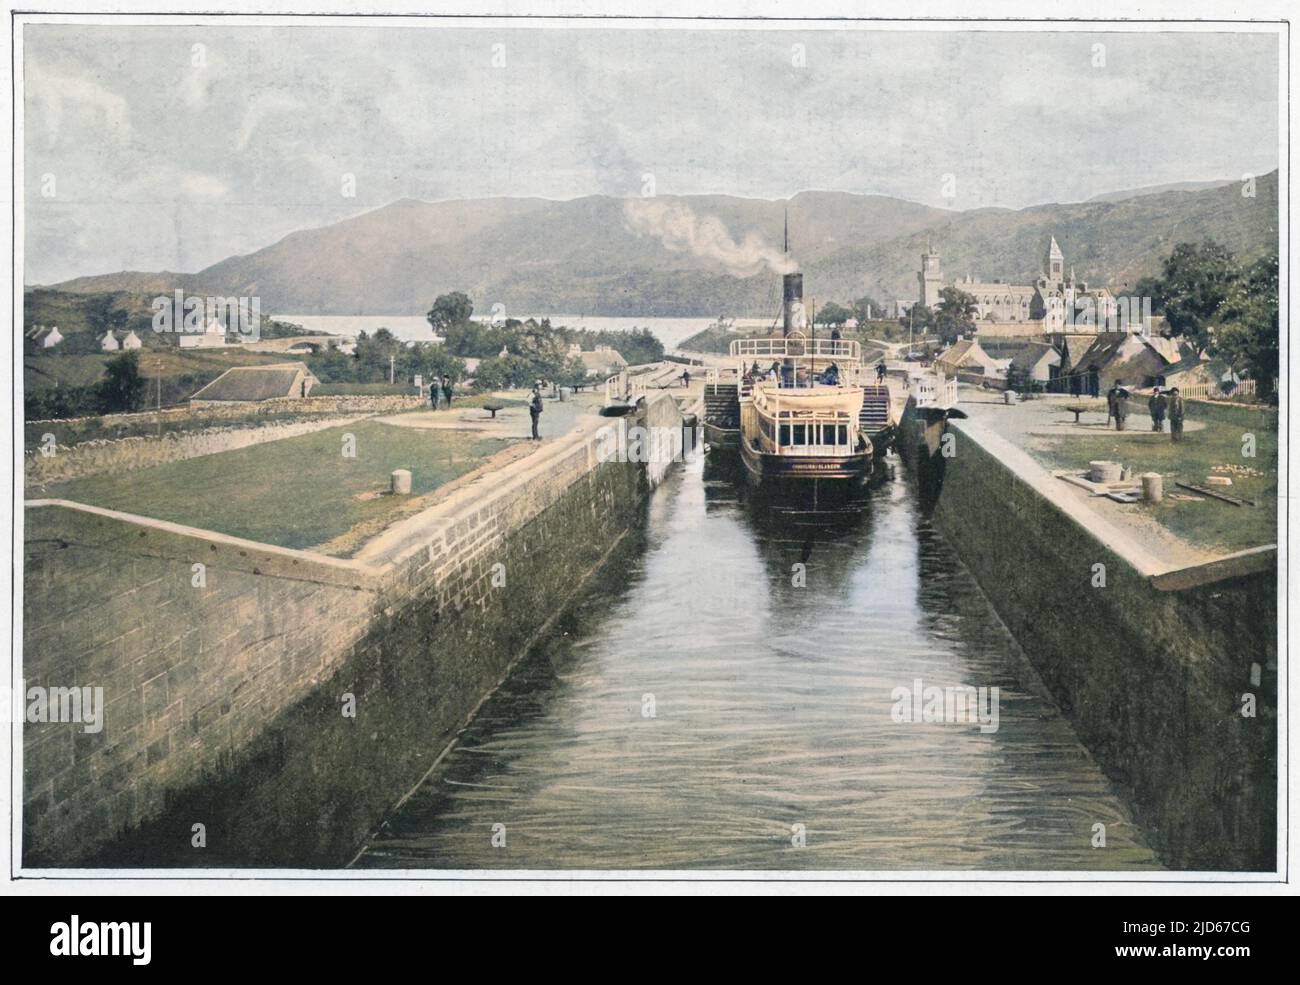 CALEDONIAN CANAL - Szene in Fort Augustus. Kolorierte Version von : 10016405 Datum: Ca. 1900 Stockfoto